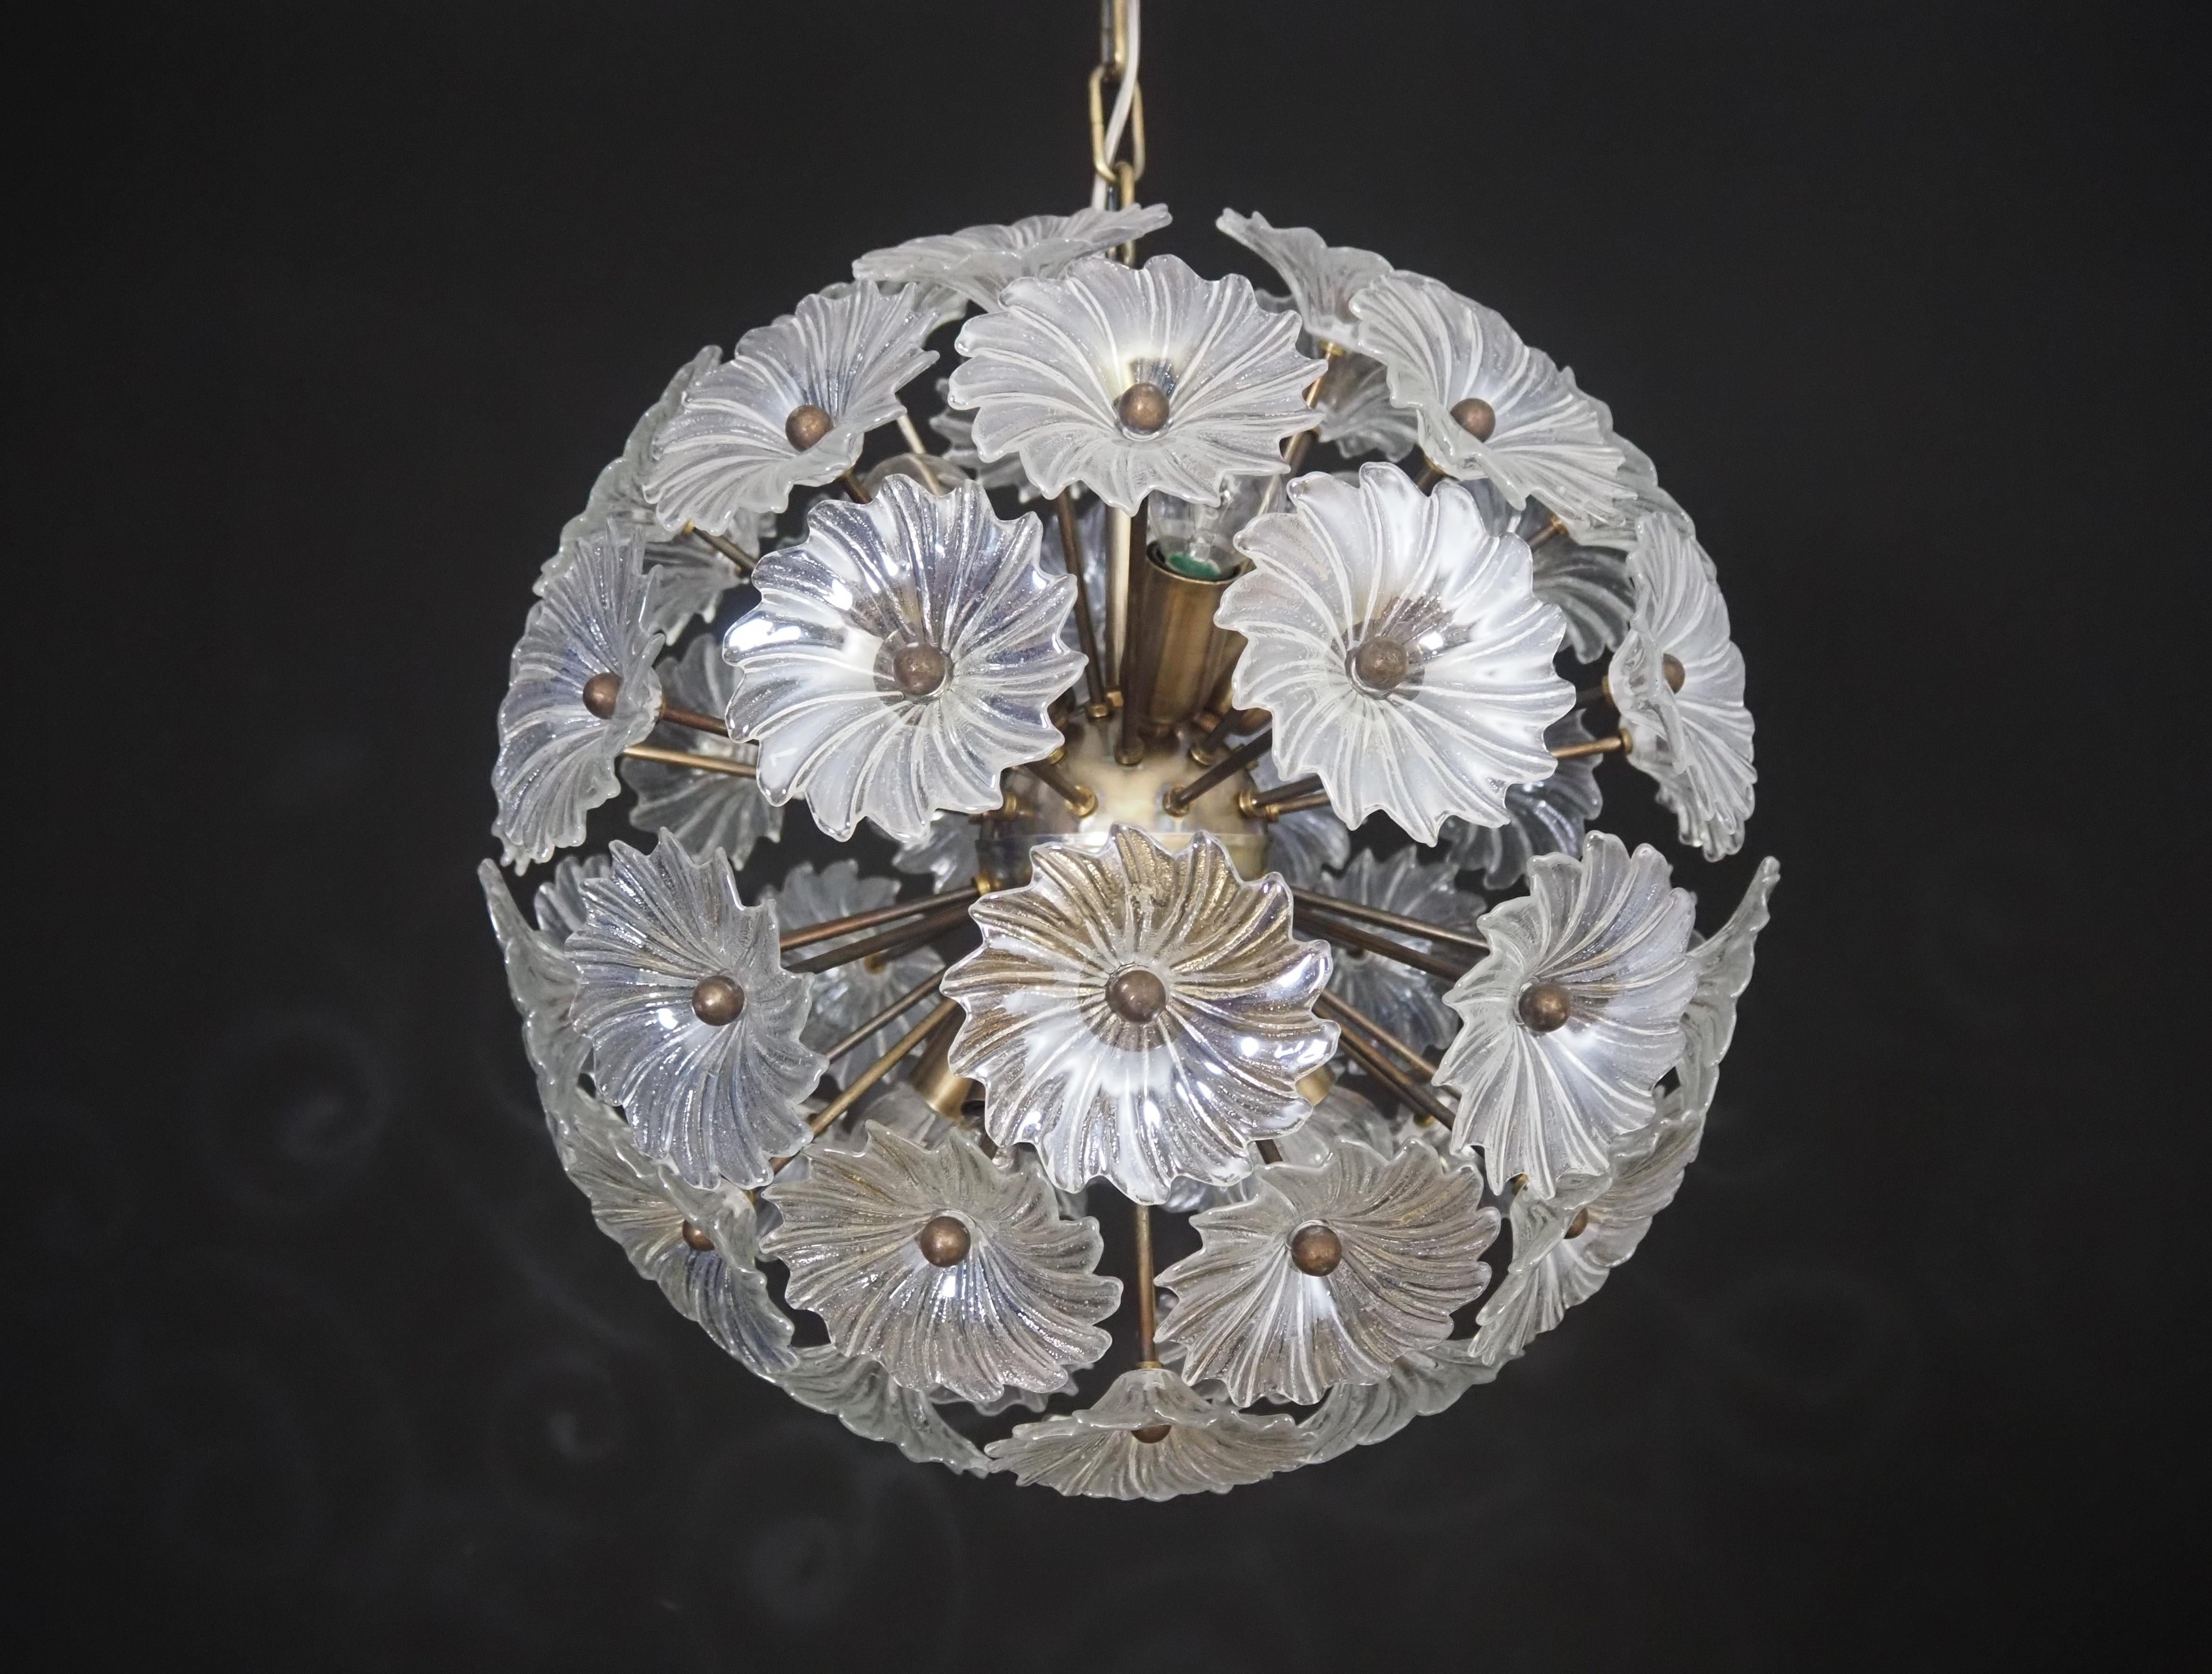 Vintage Sputnik Italian crystal chandelier - 51 Daisy clear glasses For Sale 4